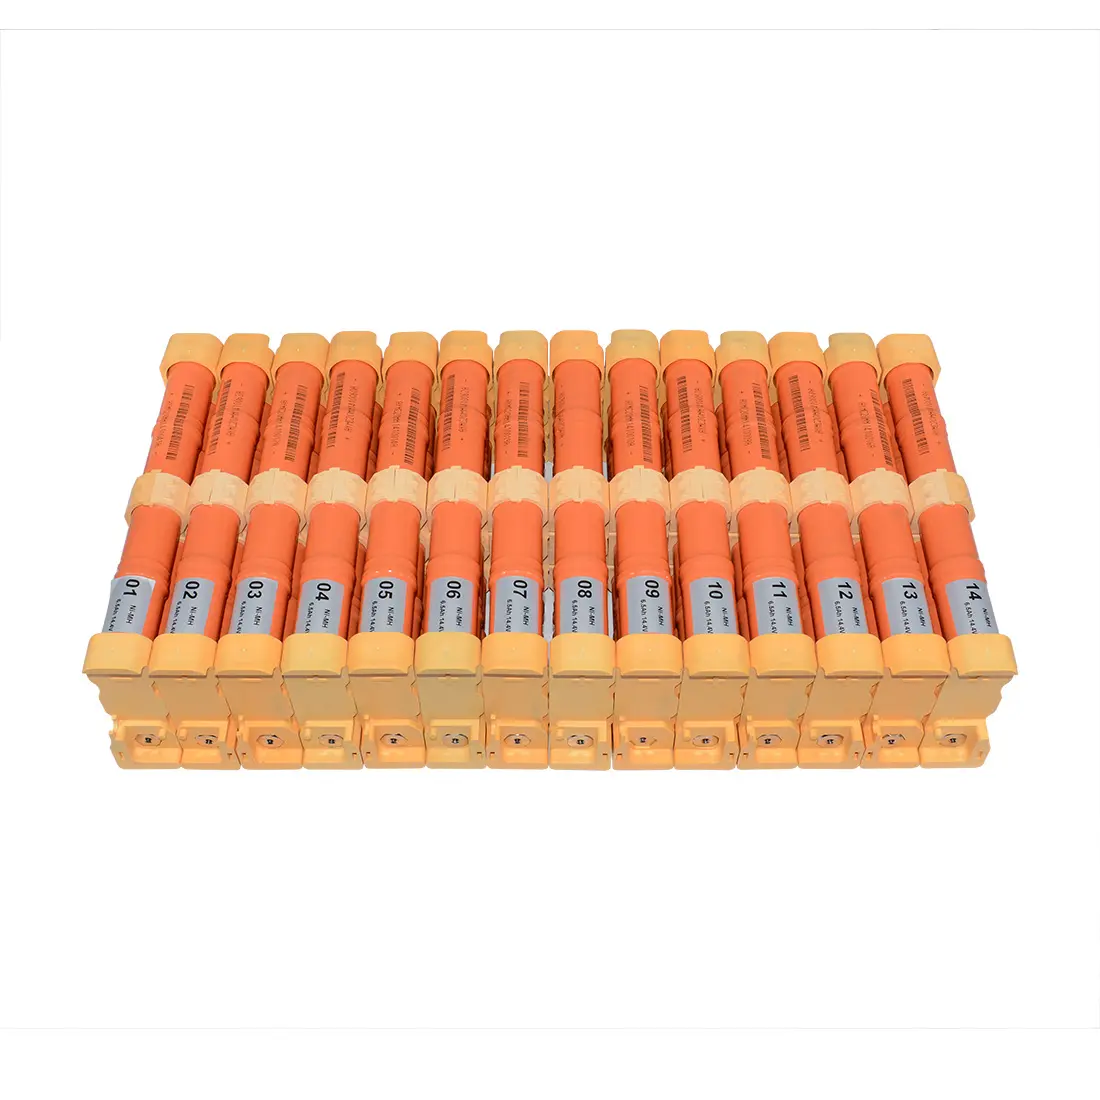 Bateria híbrida recarregável ni mh 6.5ah 14.4v prius c aqua (2012-2016), bateria híbrida para toyota aqua